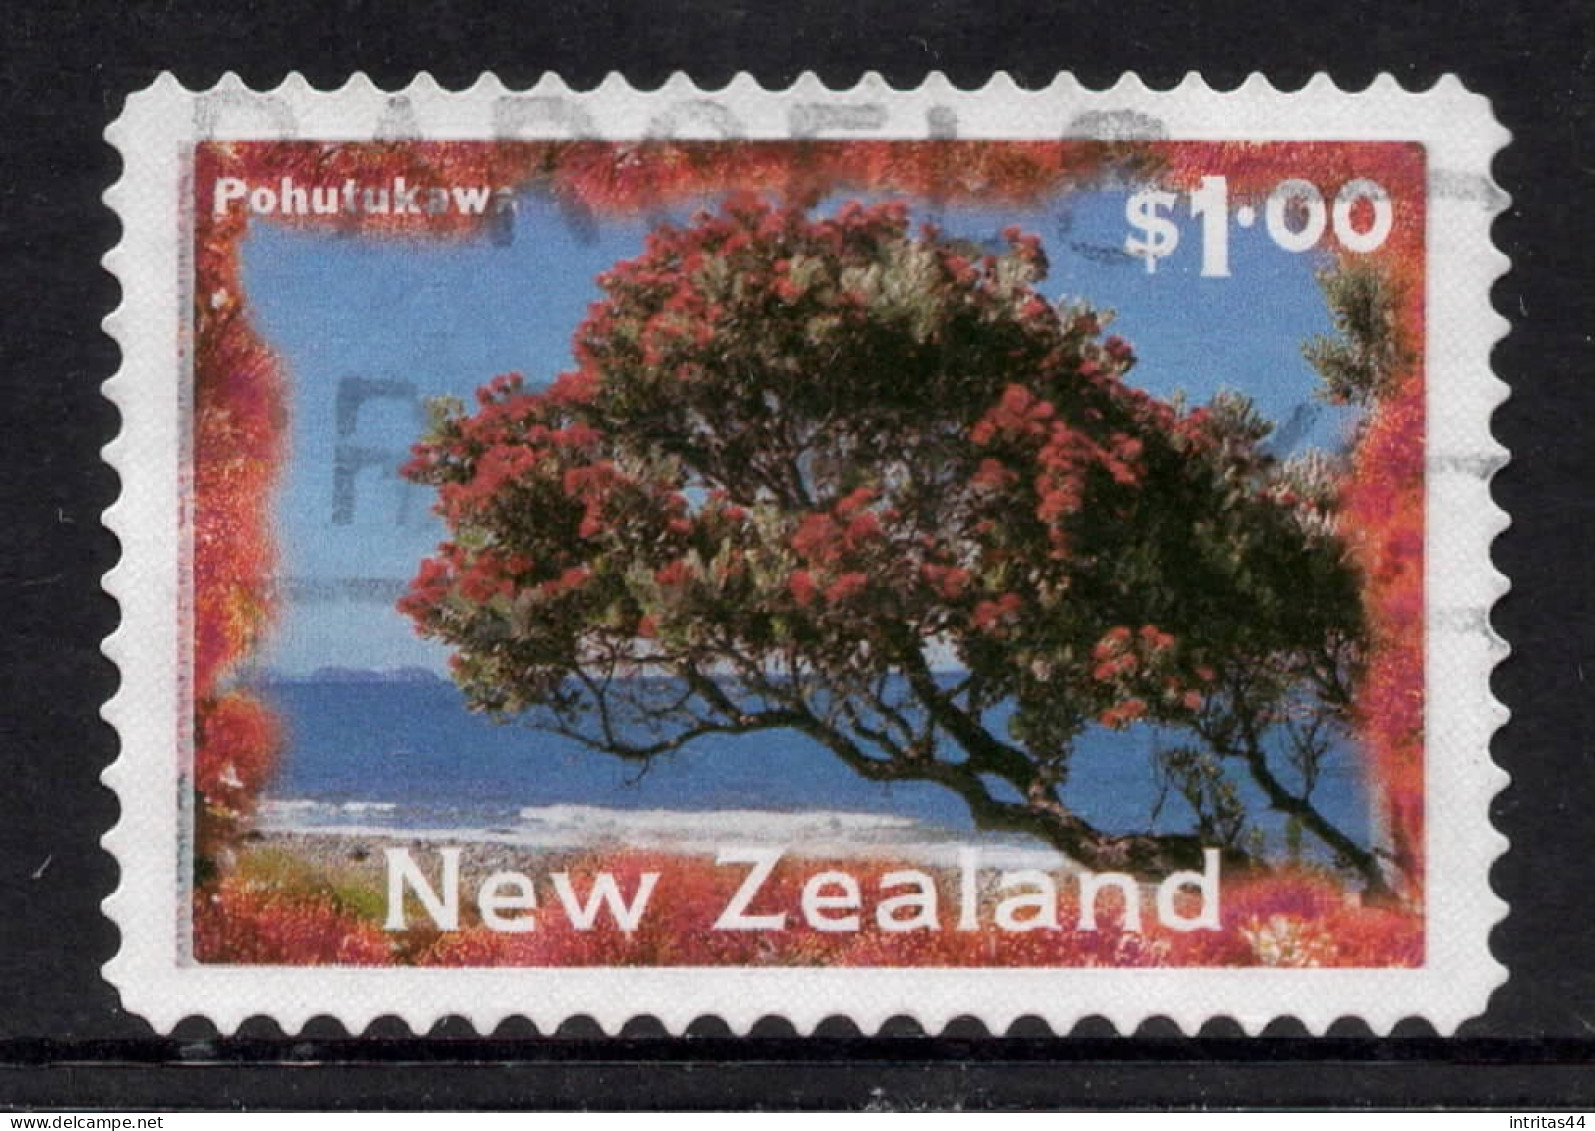 NEW ZEALAND 1996 AIRPOST  $1.00 " POHUTUKAWA " SA.  STAMP VFU - Gebraucht